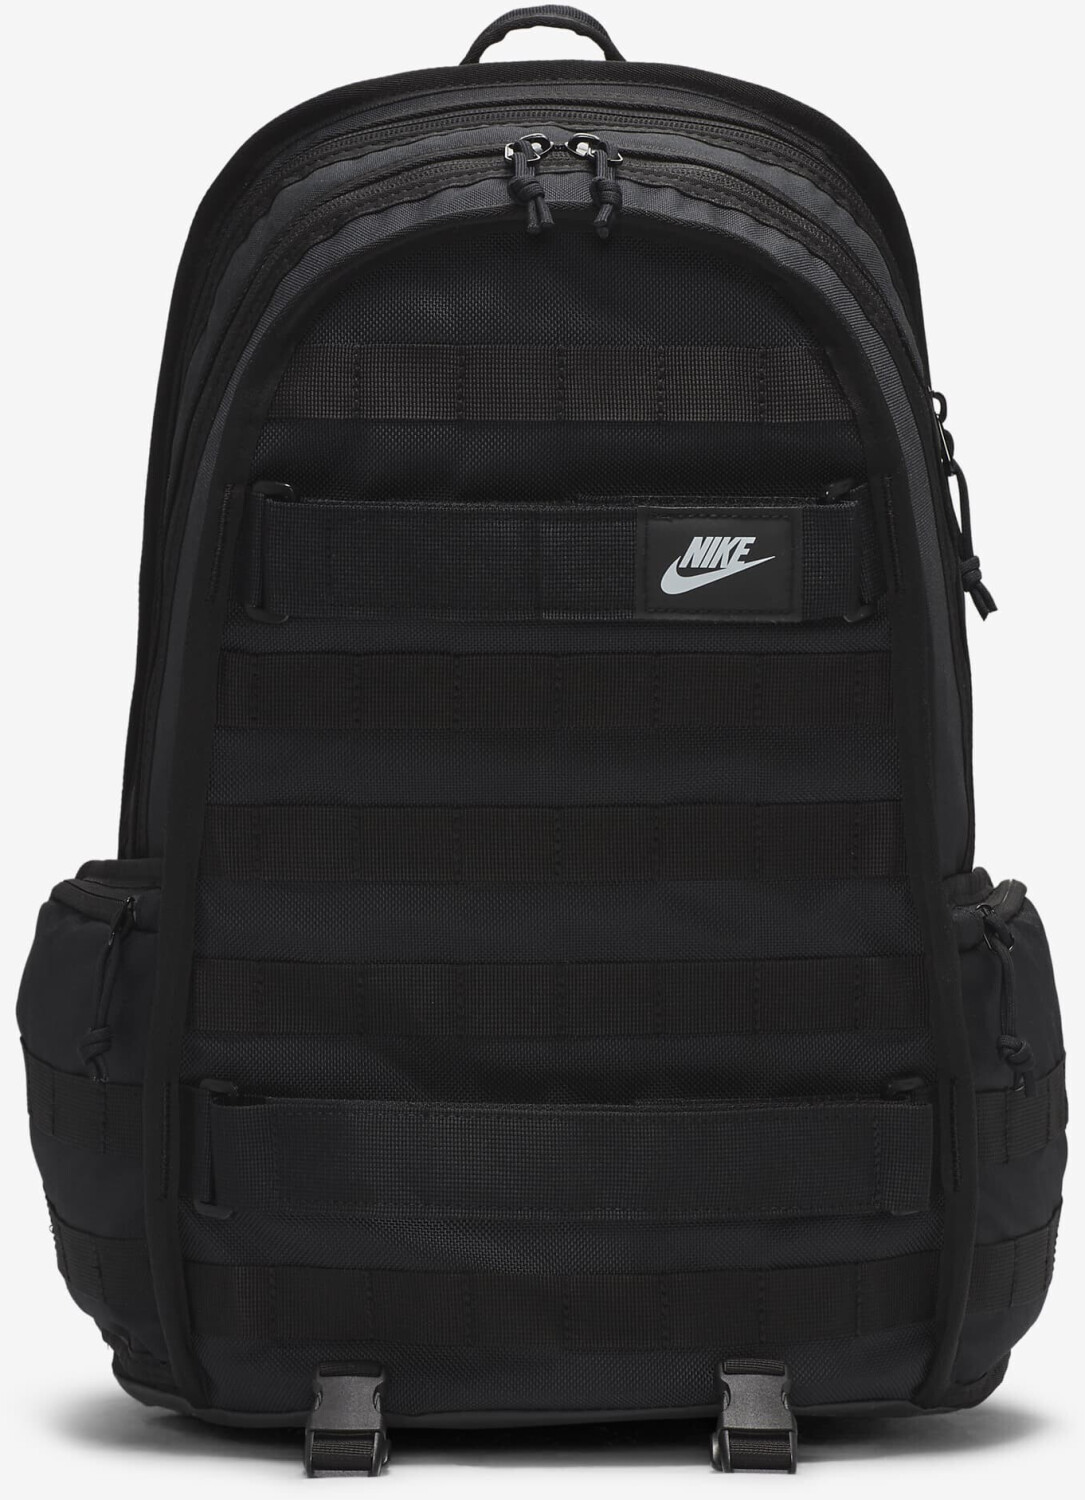 Photos - Backpack Nike Sportswear RPM black/black/white 